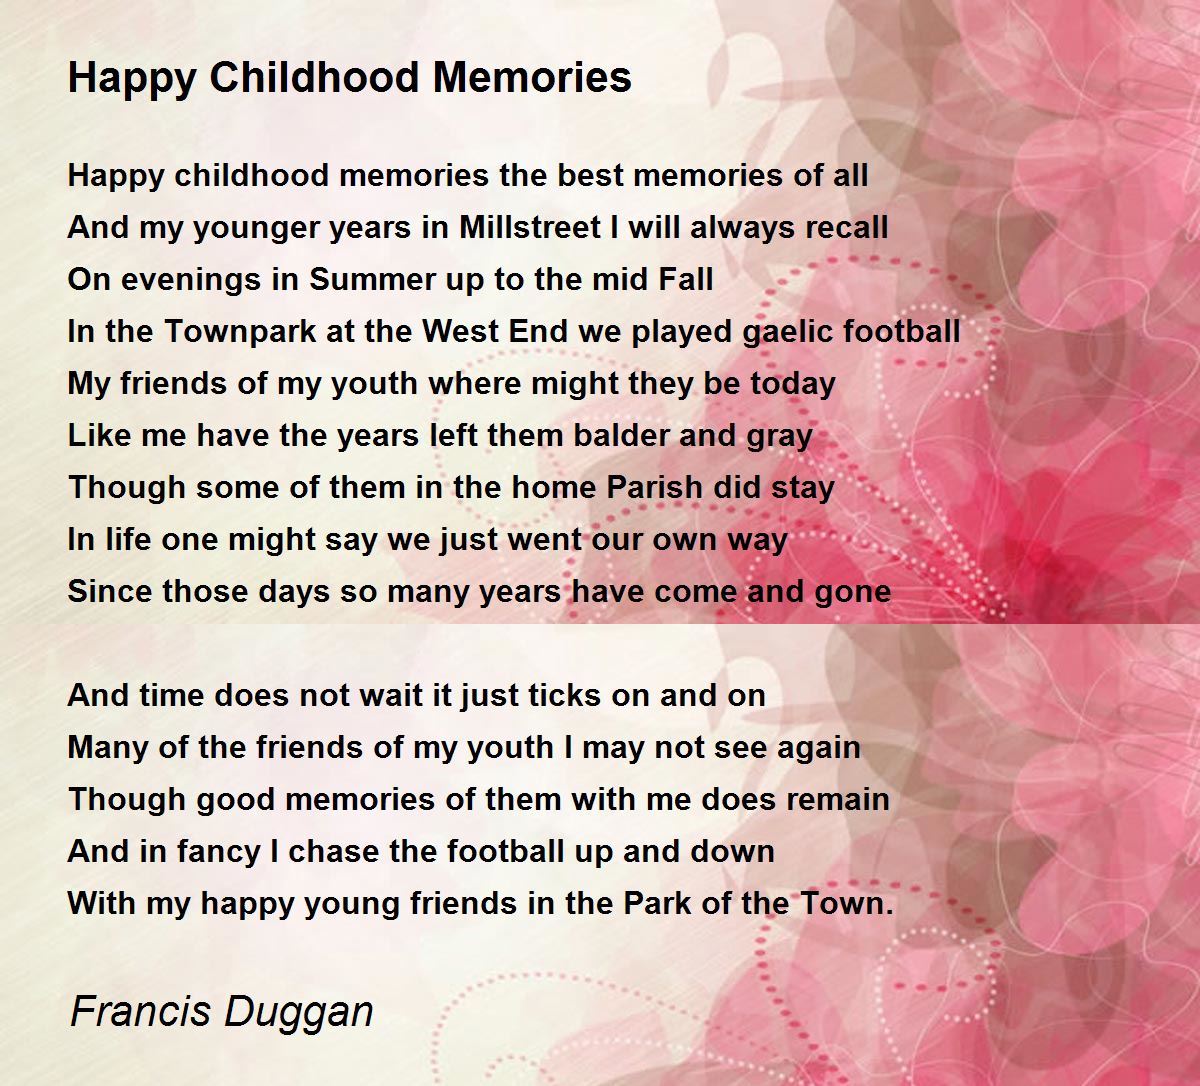 childhood memories quotes poems